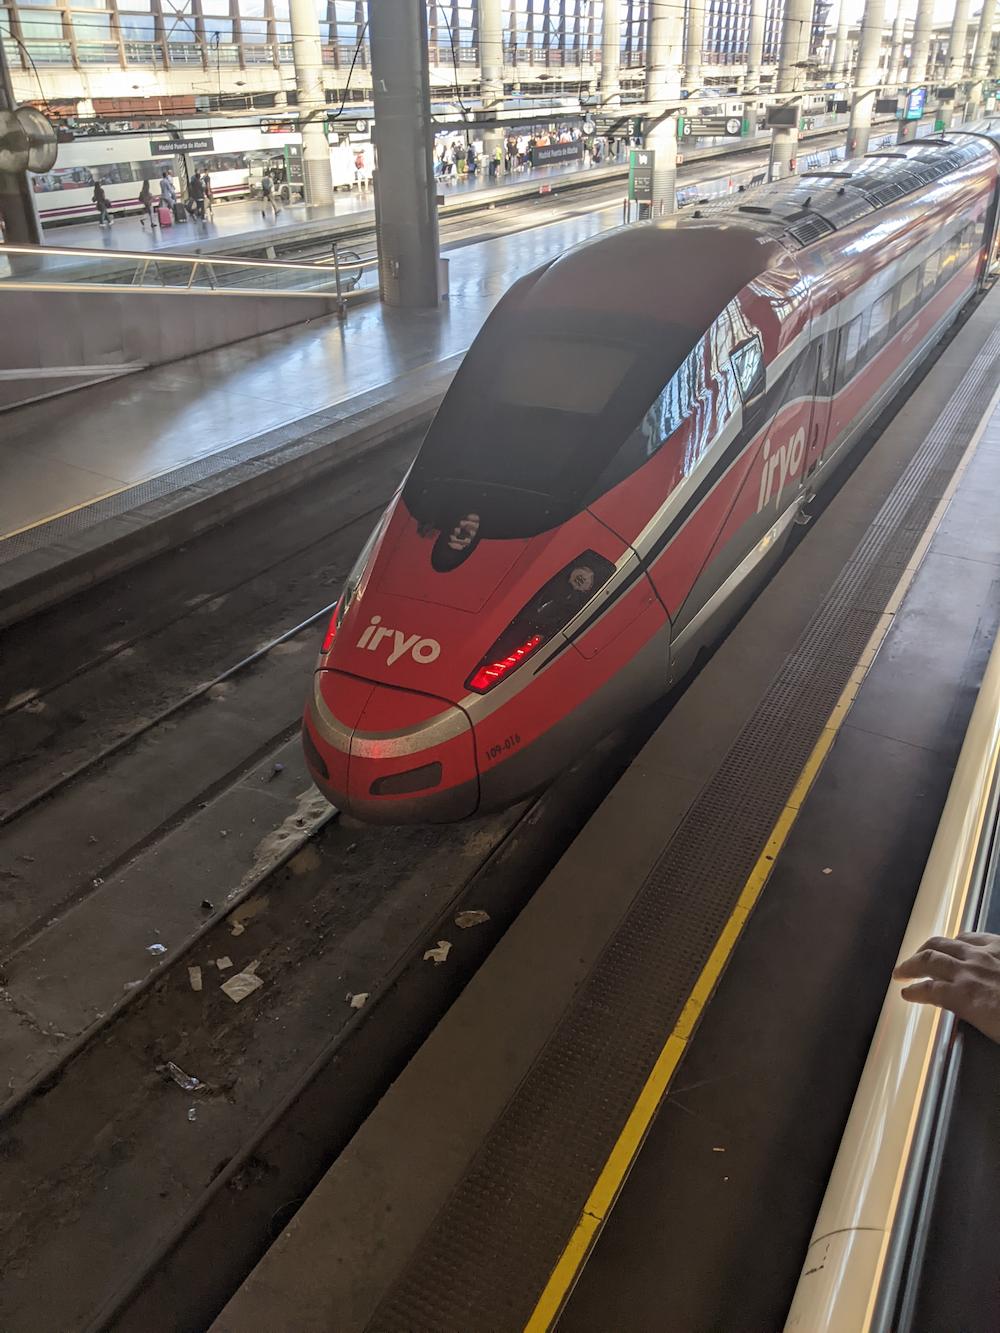 iryo train at platform in Madrid Atocha station